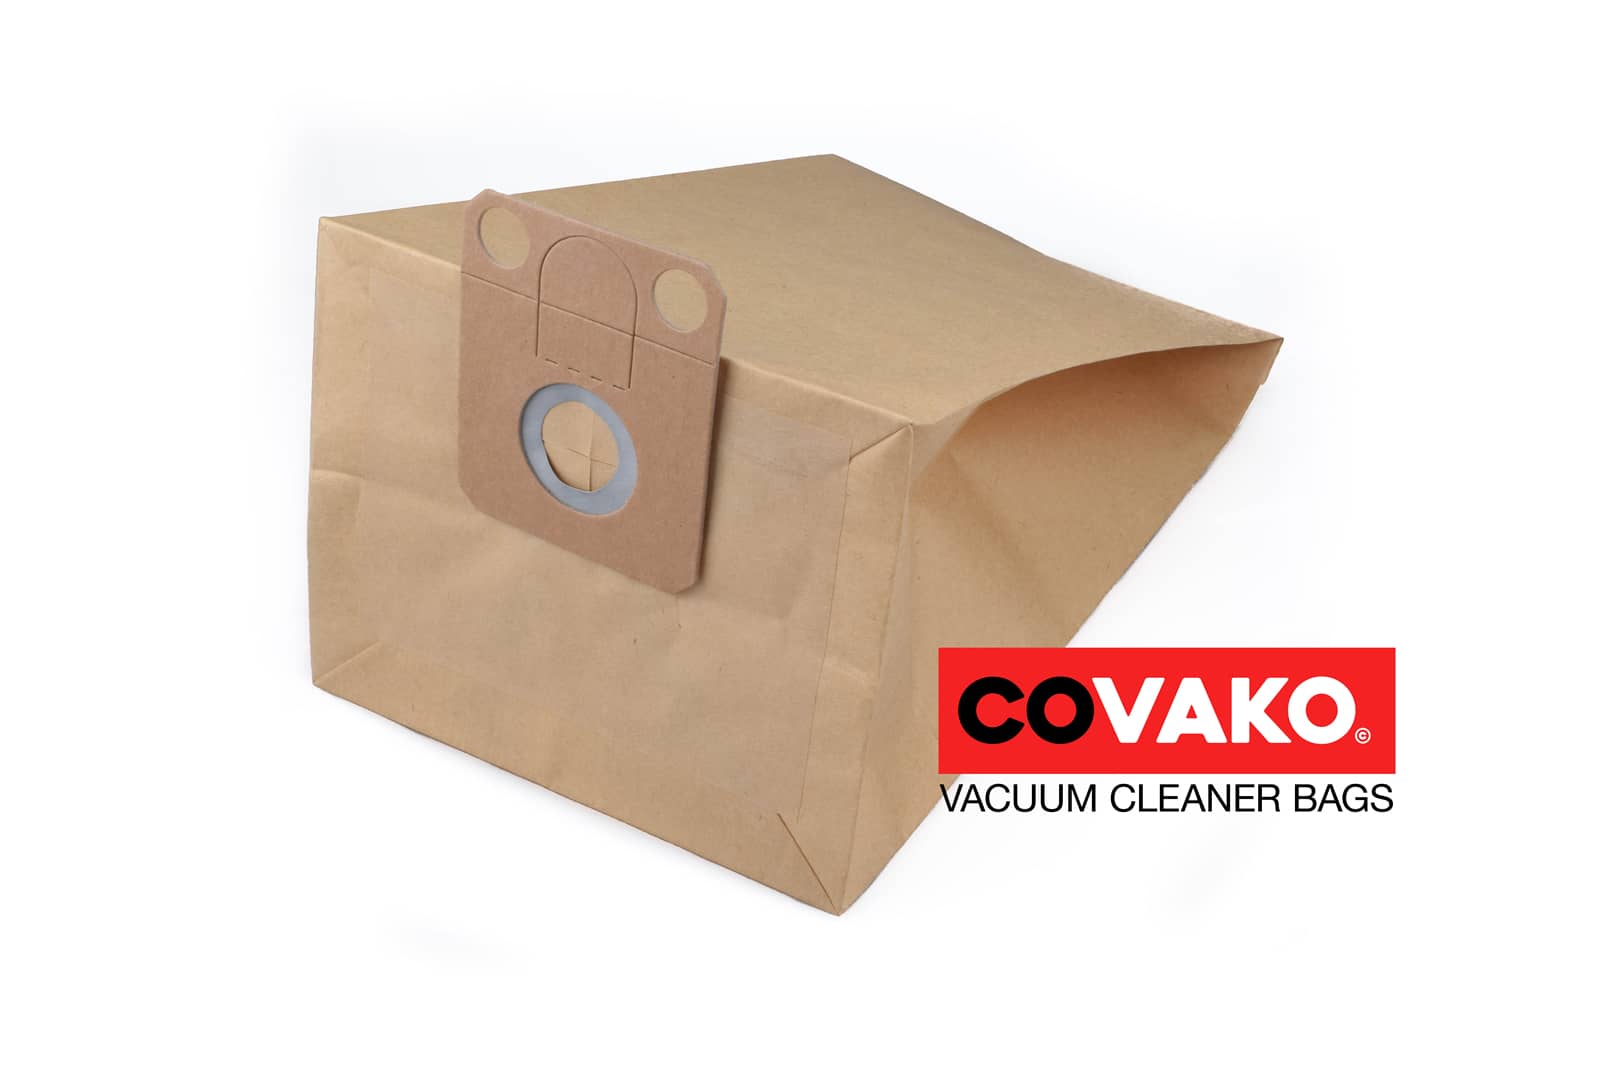 Alto Family / Paper - Alto vacuum cleaner bags